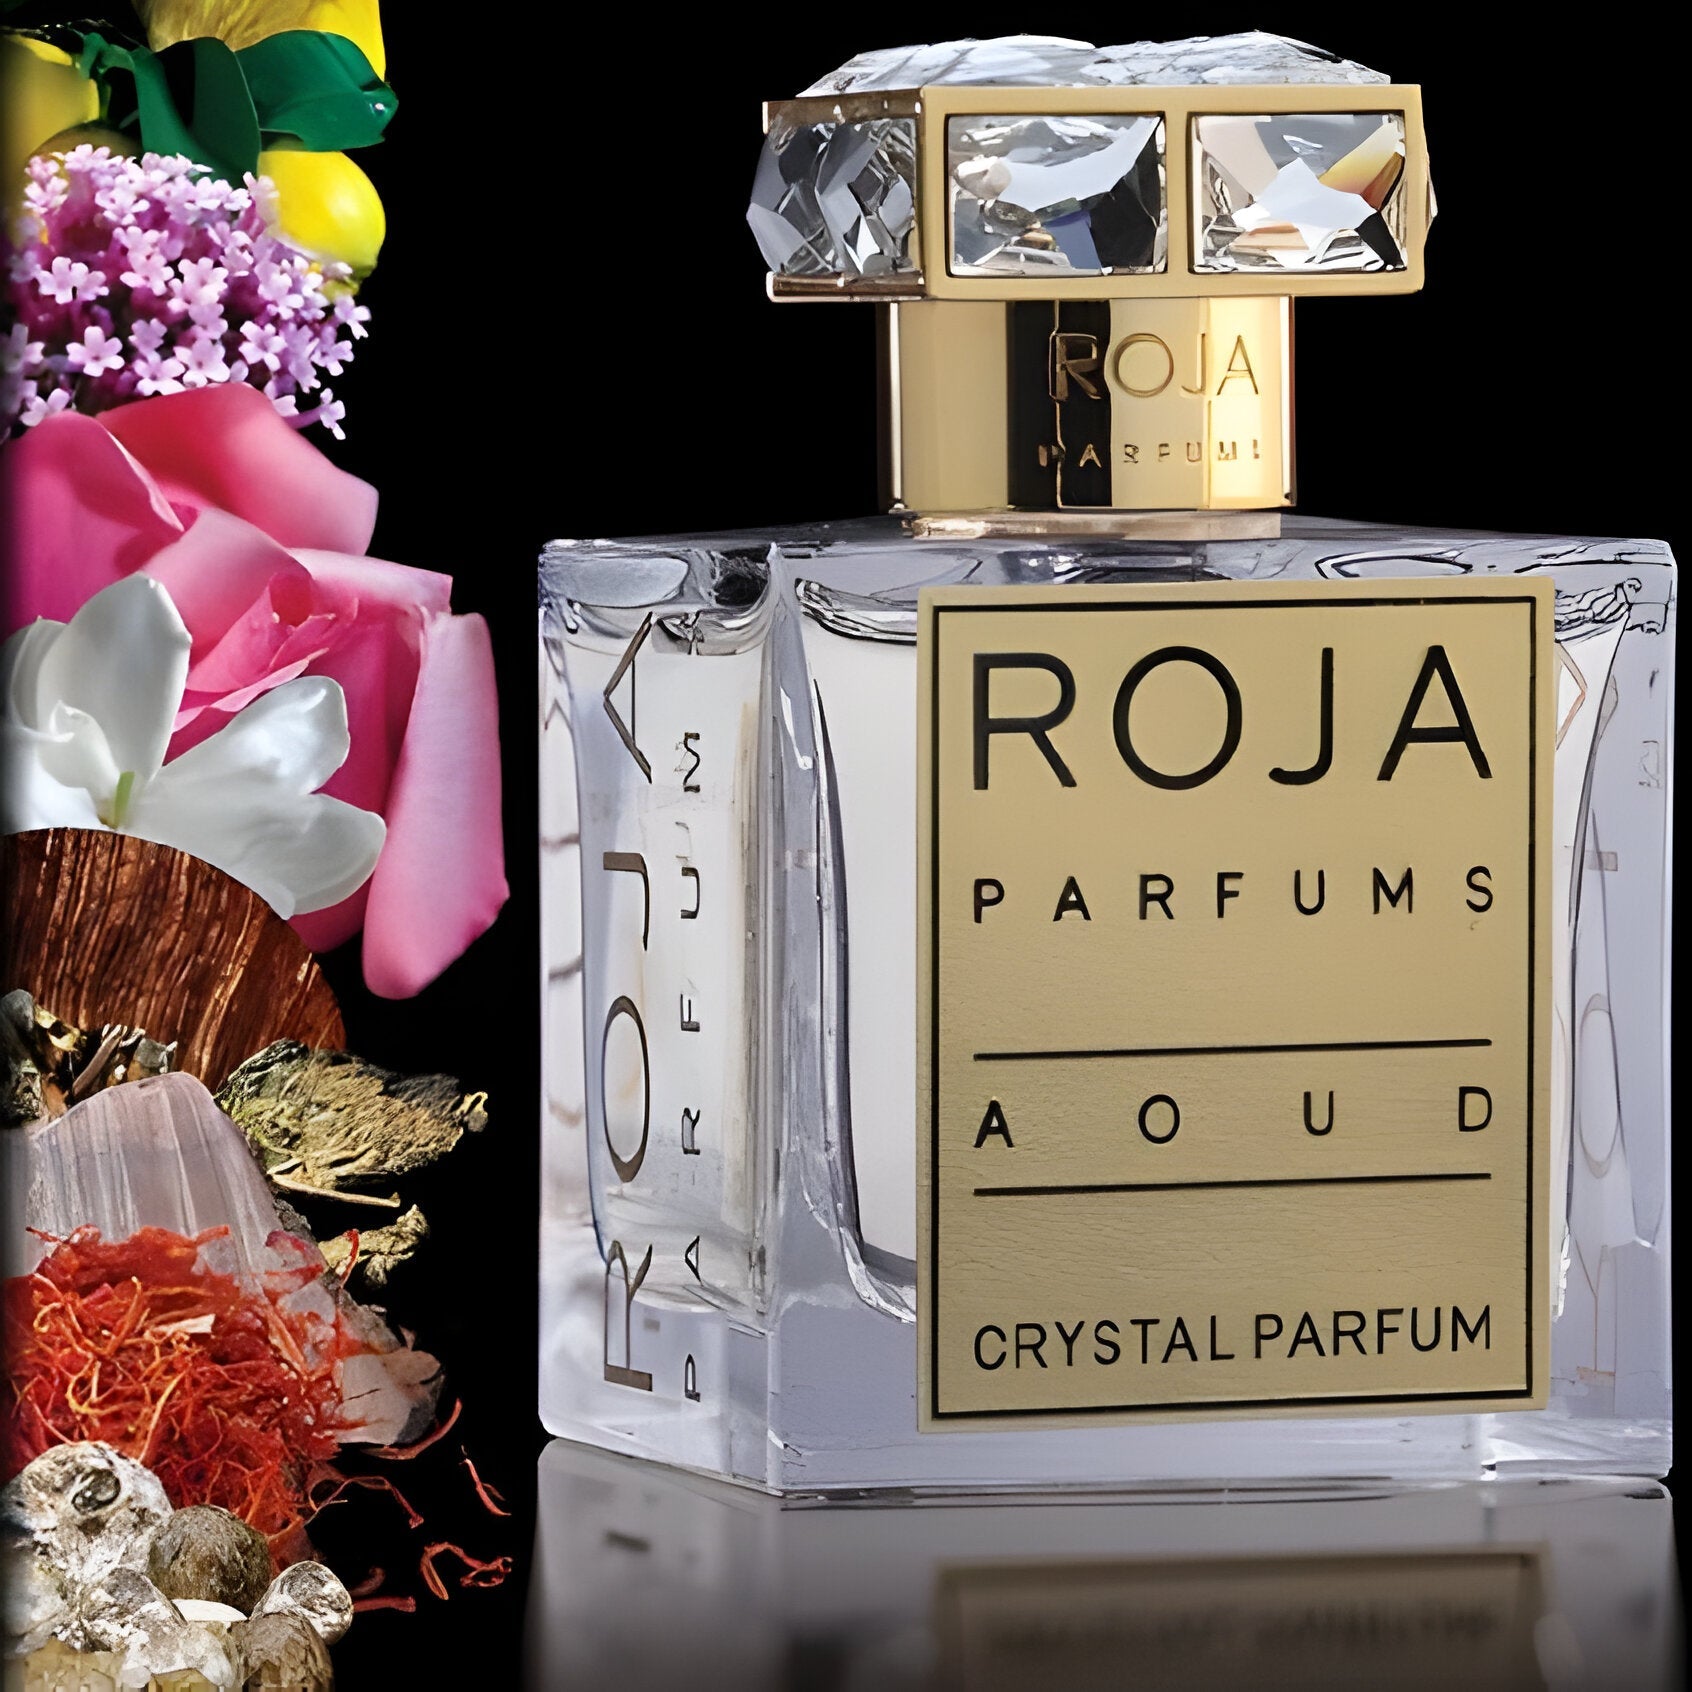 Roja Parfums Aoud Crystal Parfum | My Perfume Shop Australia